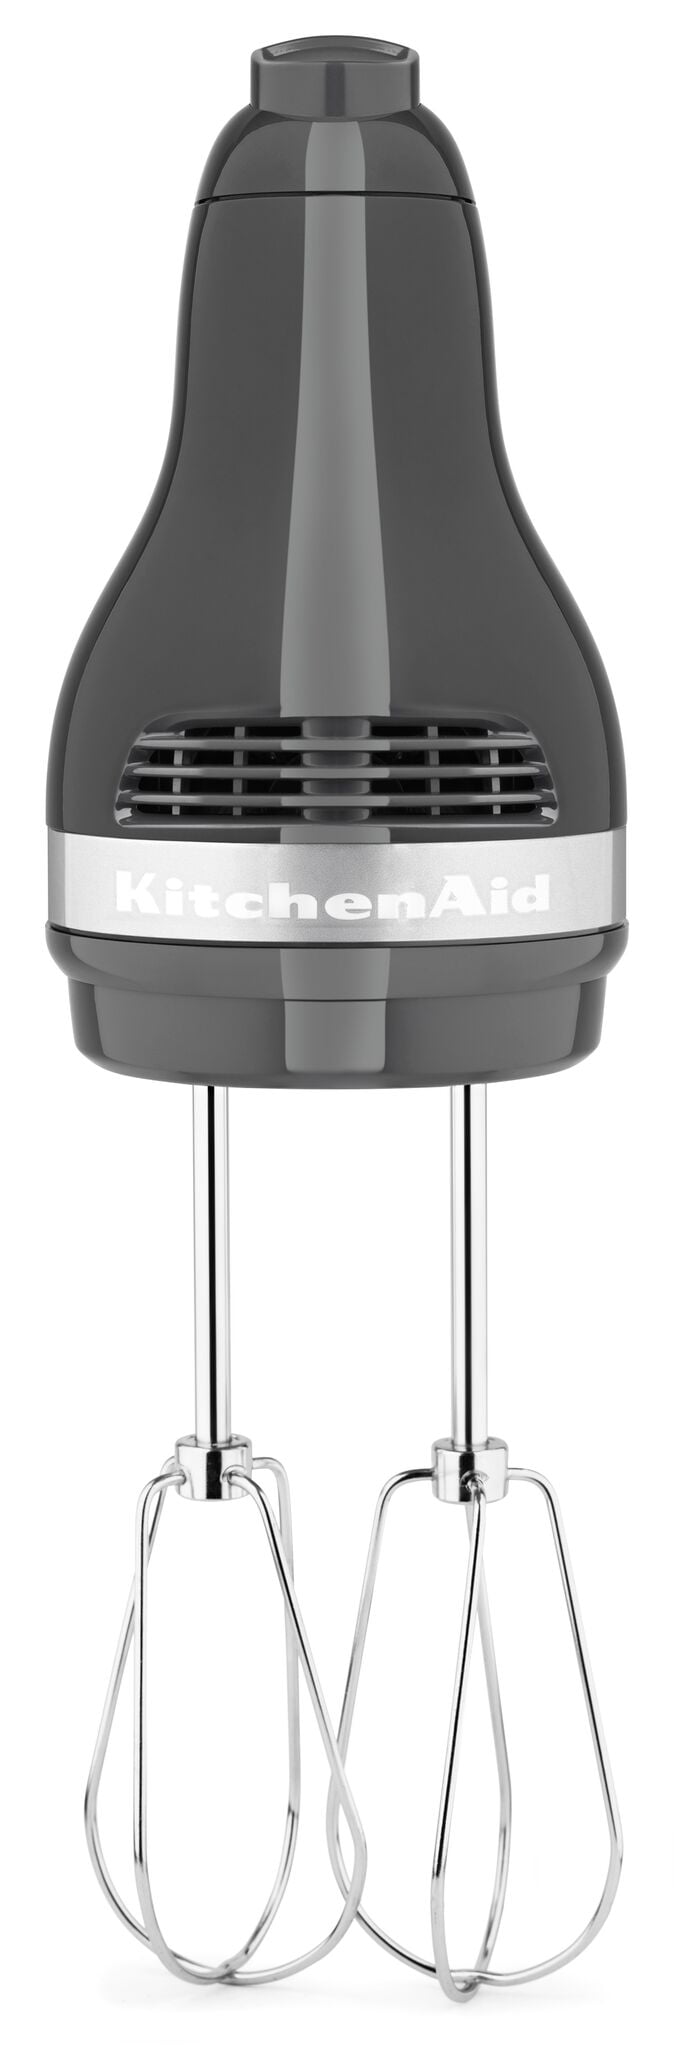 KitchenAid 5 Ultra Power Speed Hand Mixer - KHM512, Aqua Sky 5